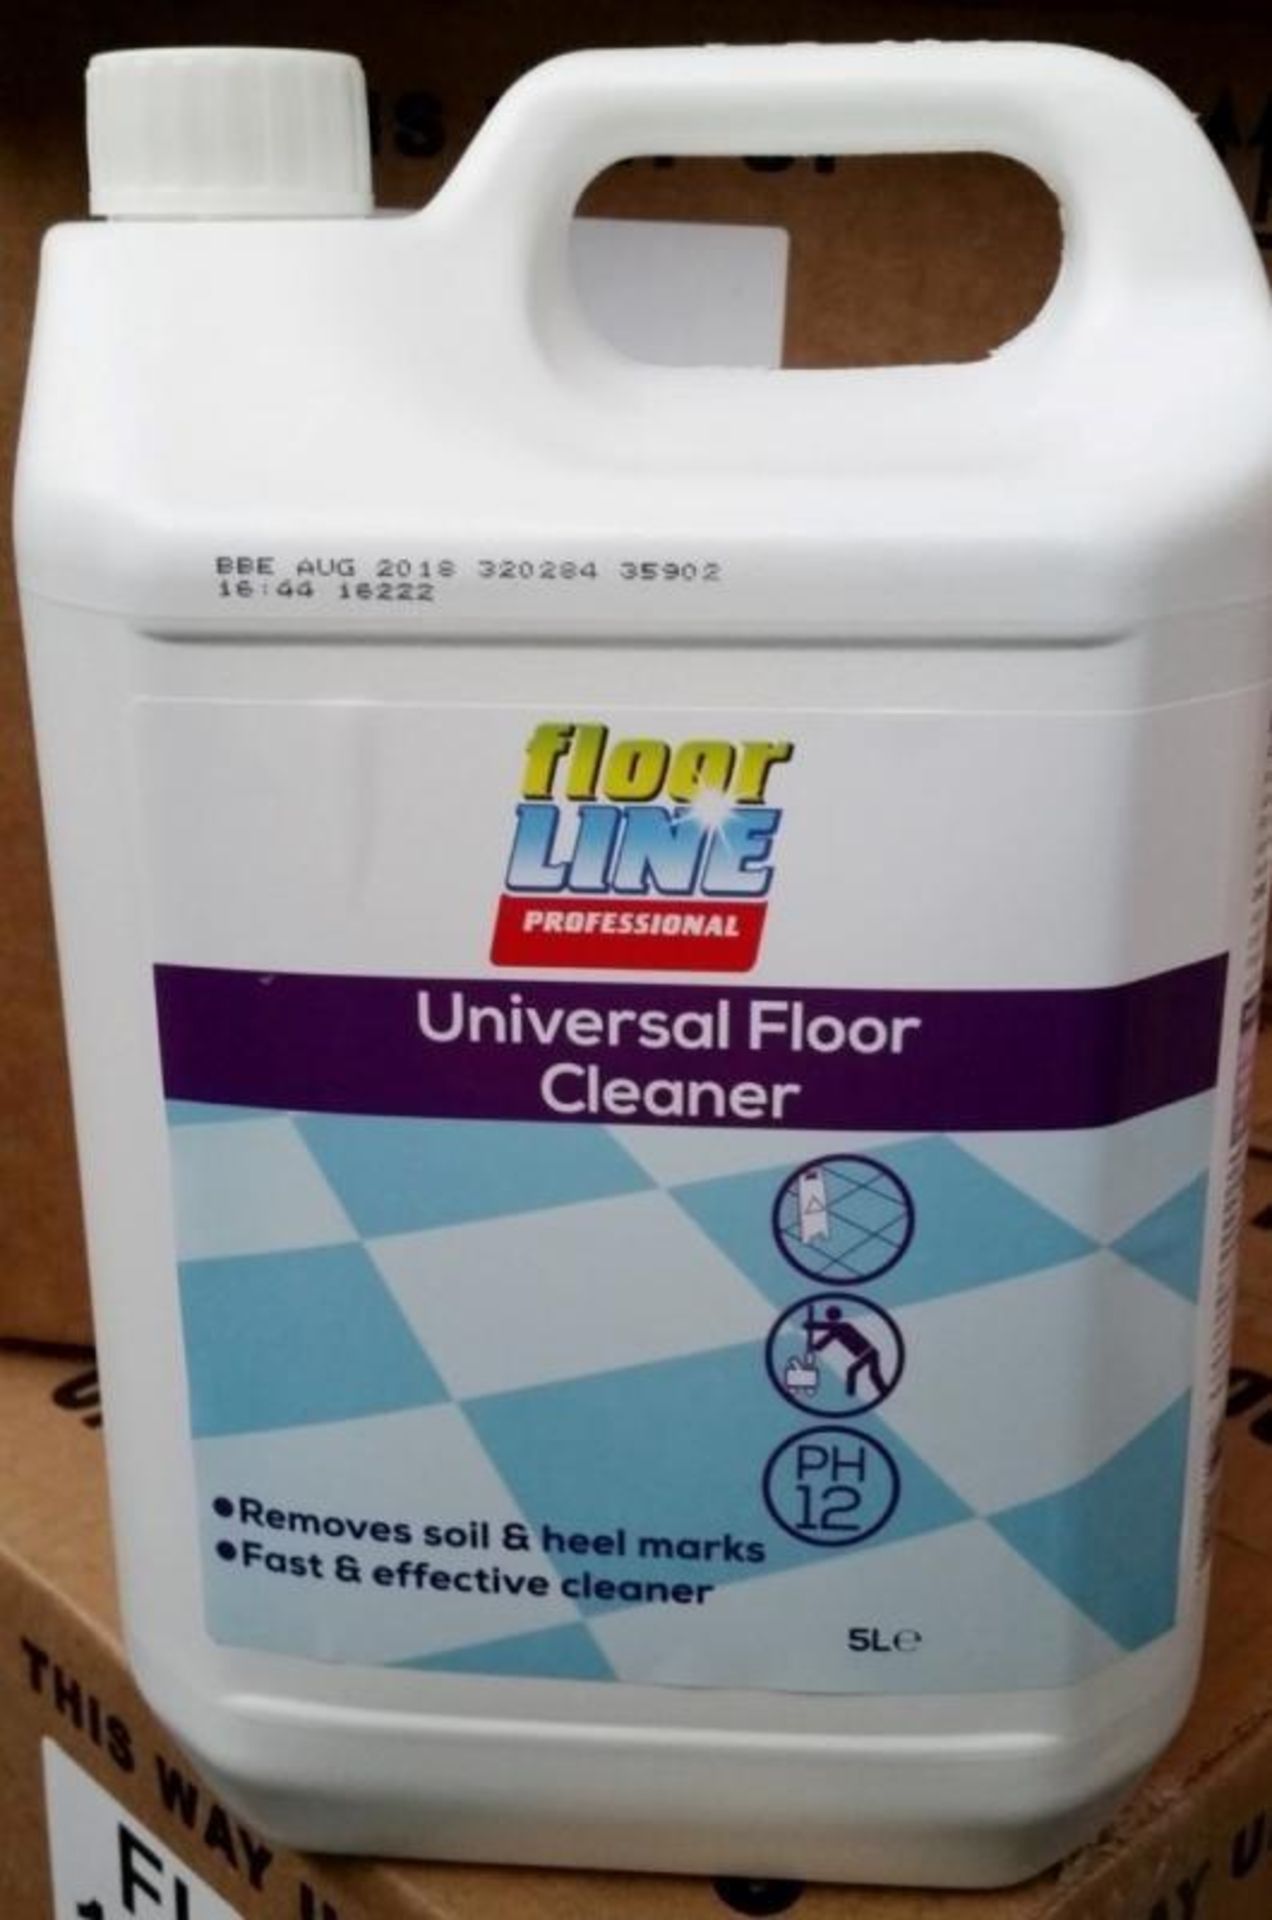 2 x Floor Line Professional 5 Litre Universal Floor Cleaner - Removes Soil & Heel Marks - Fast & Eff